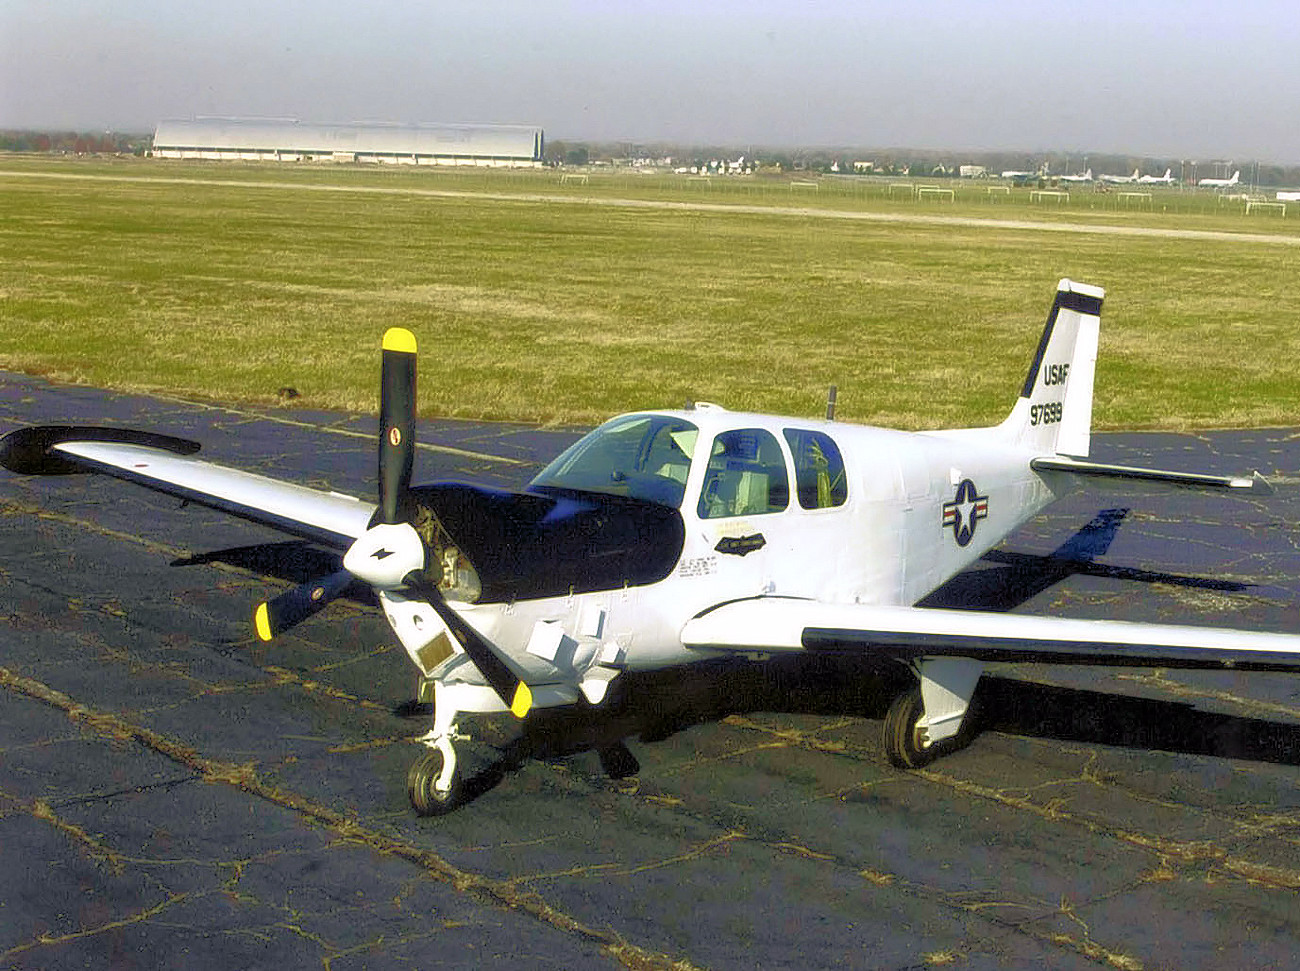 Beech QU-22B - Dayton Ohio